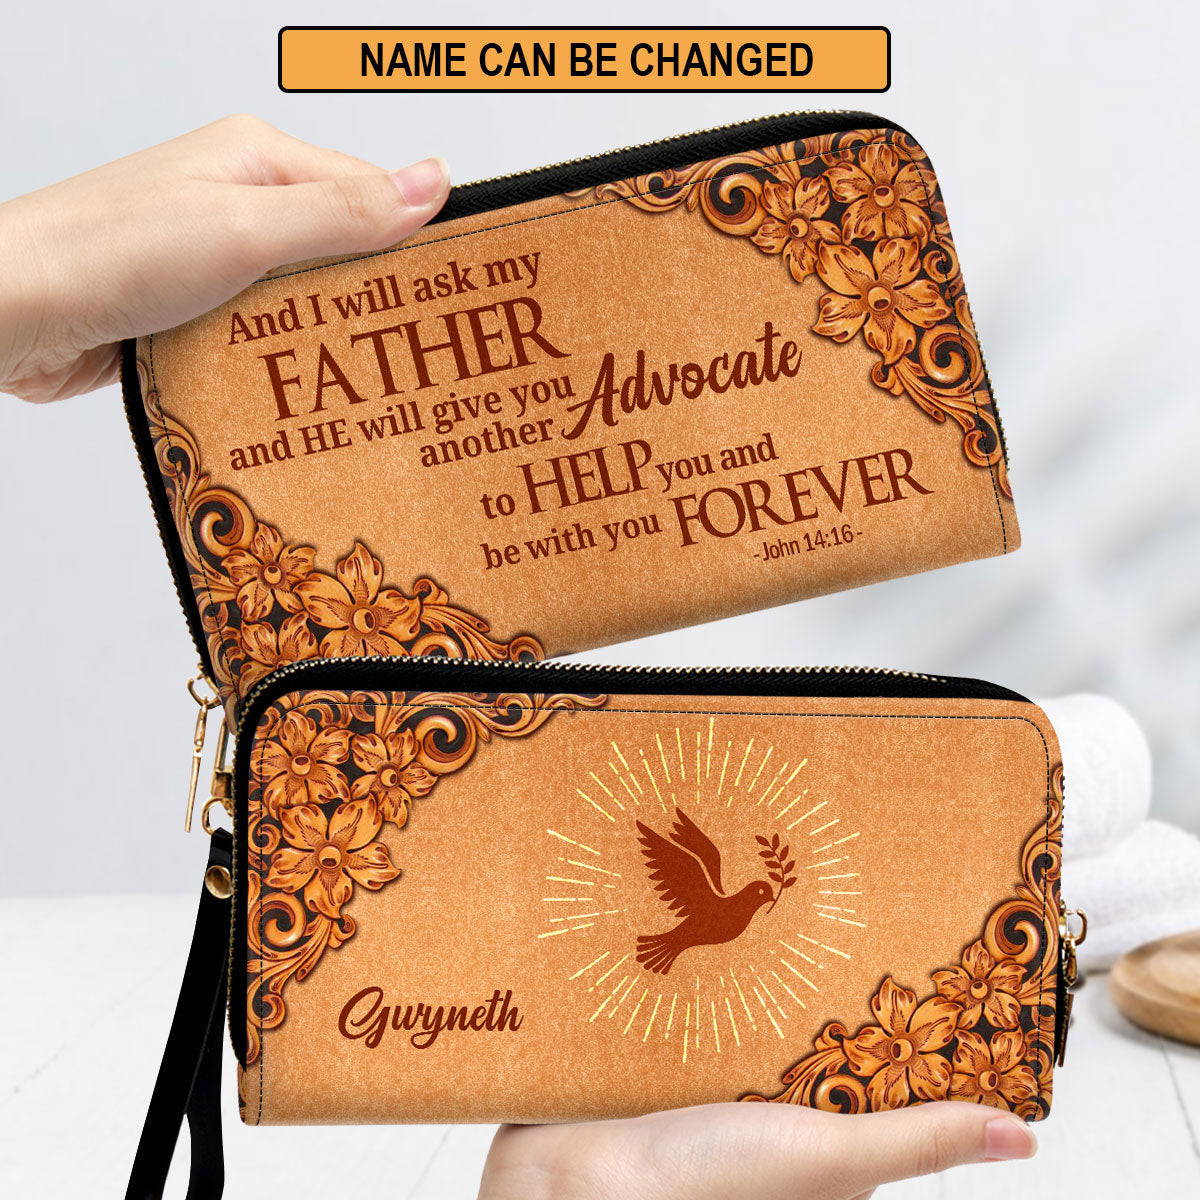 Orange John 14 16 Clutch Purse For Women - Personalized Name - Christian Gifts For Women